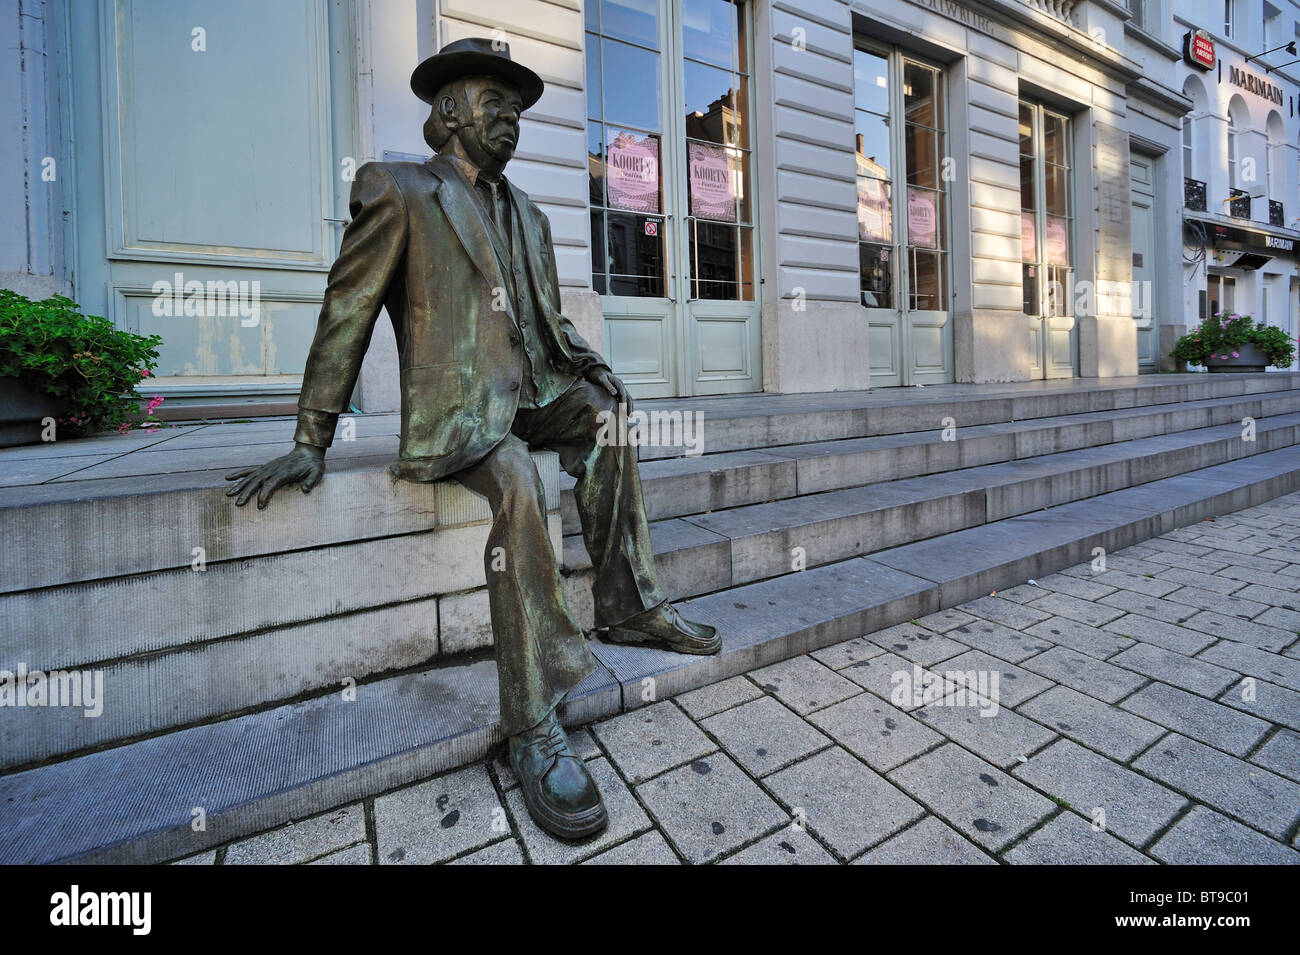 Statue of actor comedian Romain De Coninck in front of the Minard Theatre at Ghent, Belgium Stock Photo